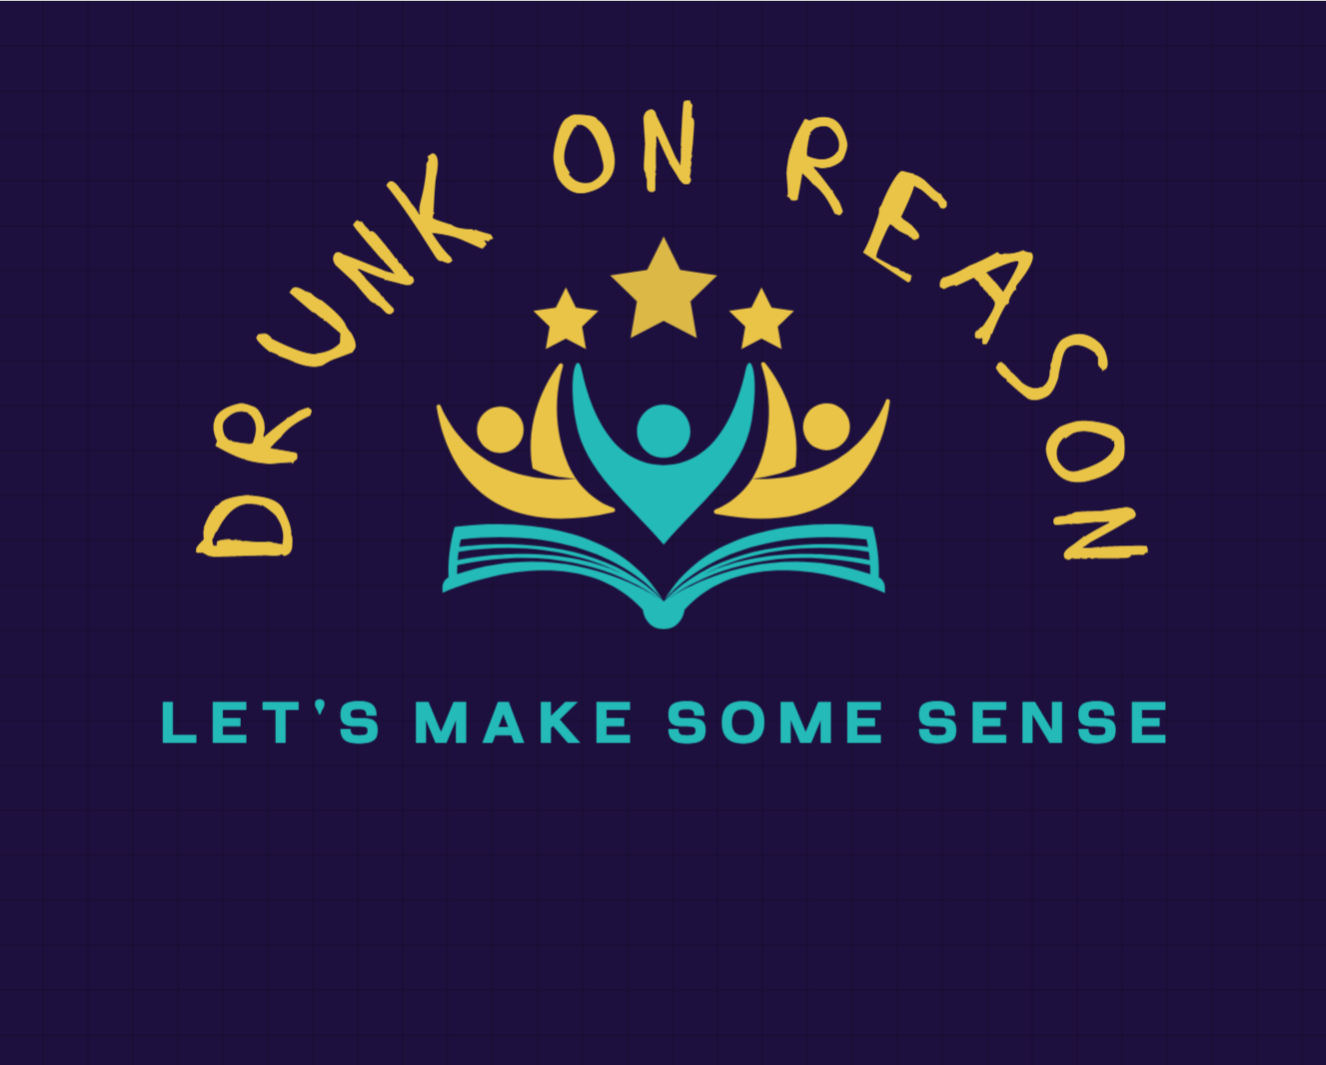 Drunk On Reason